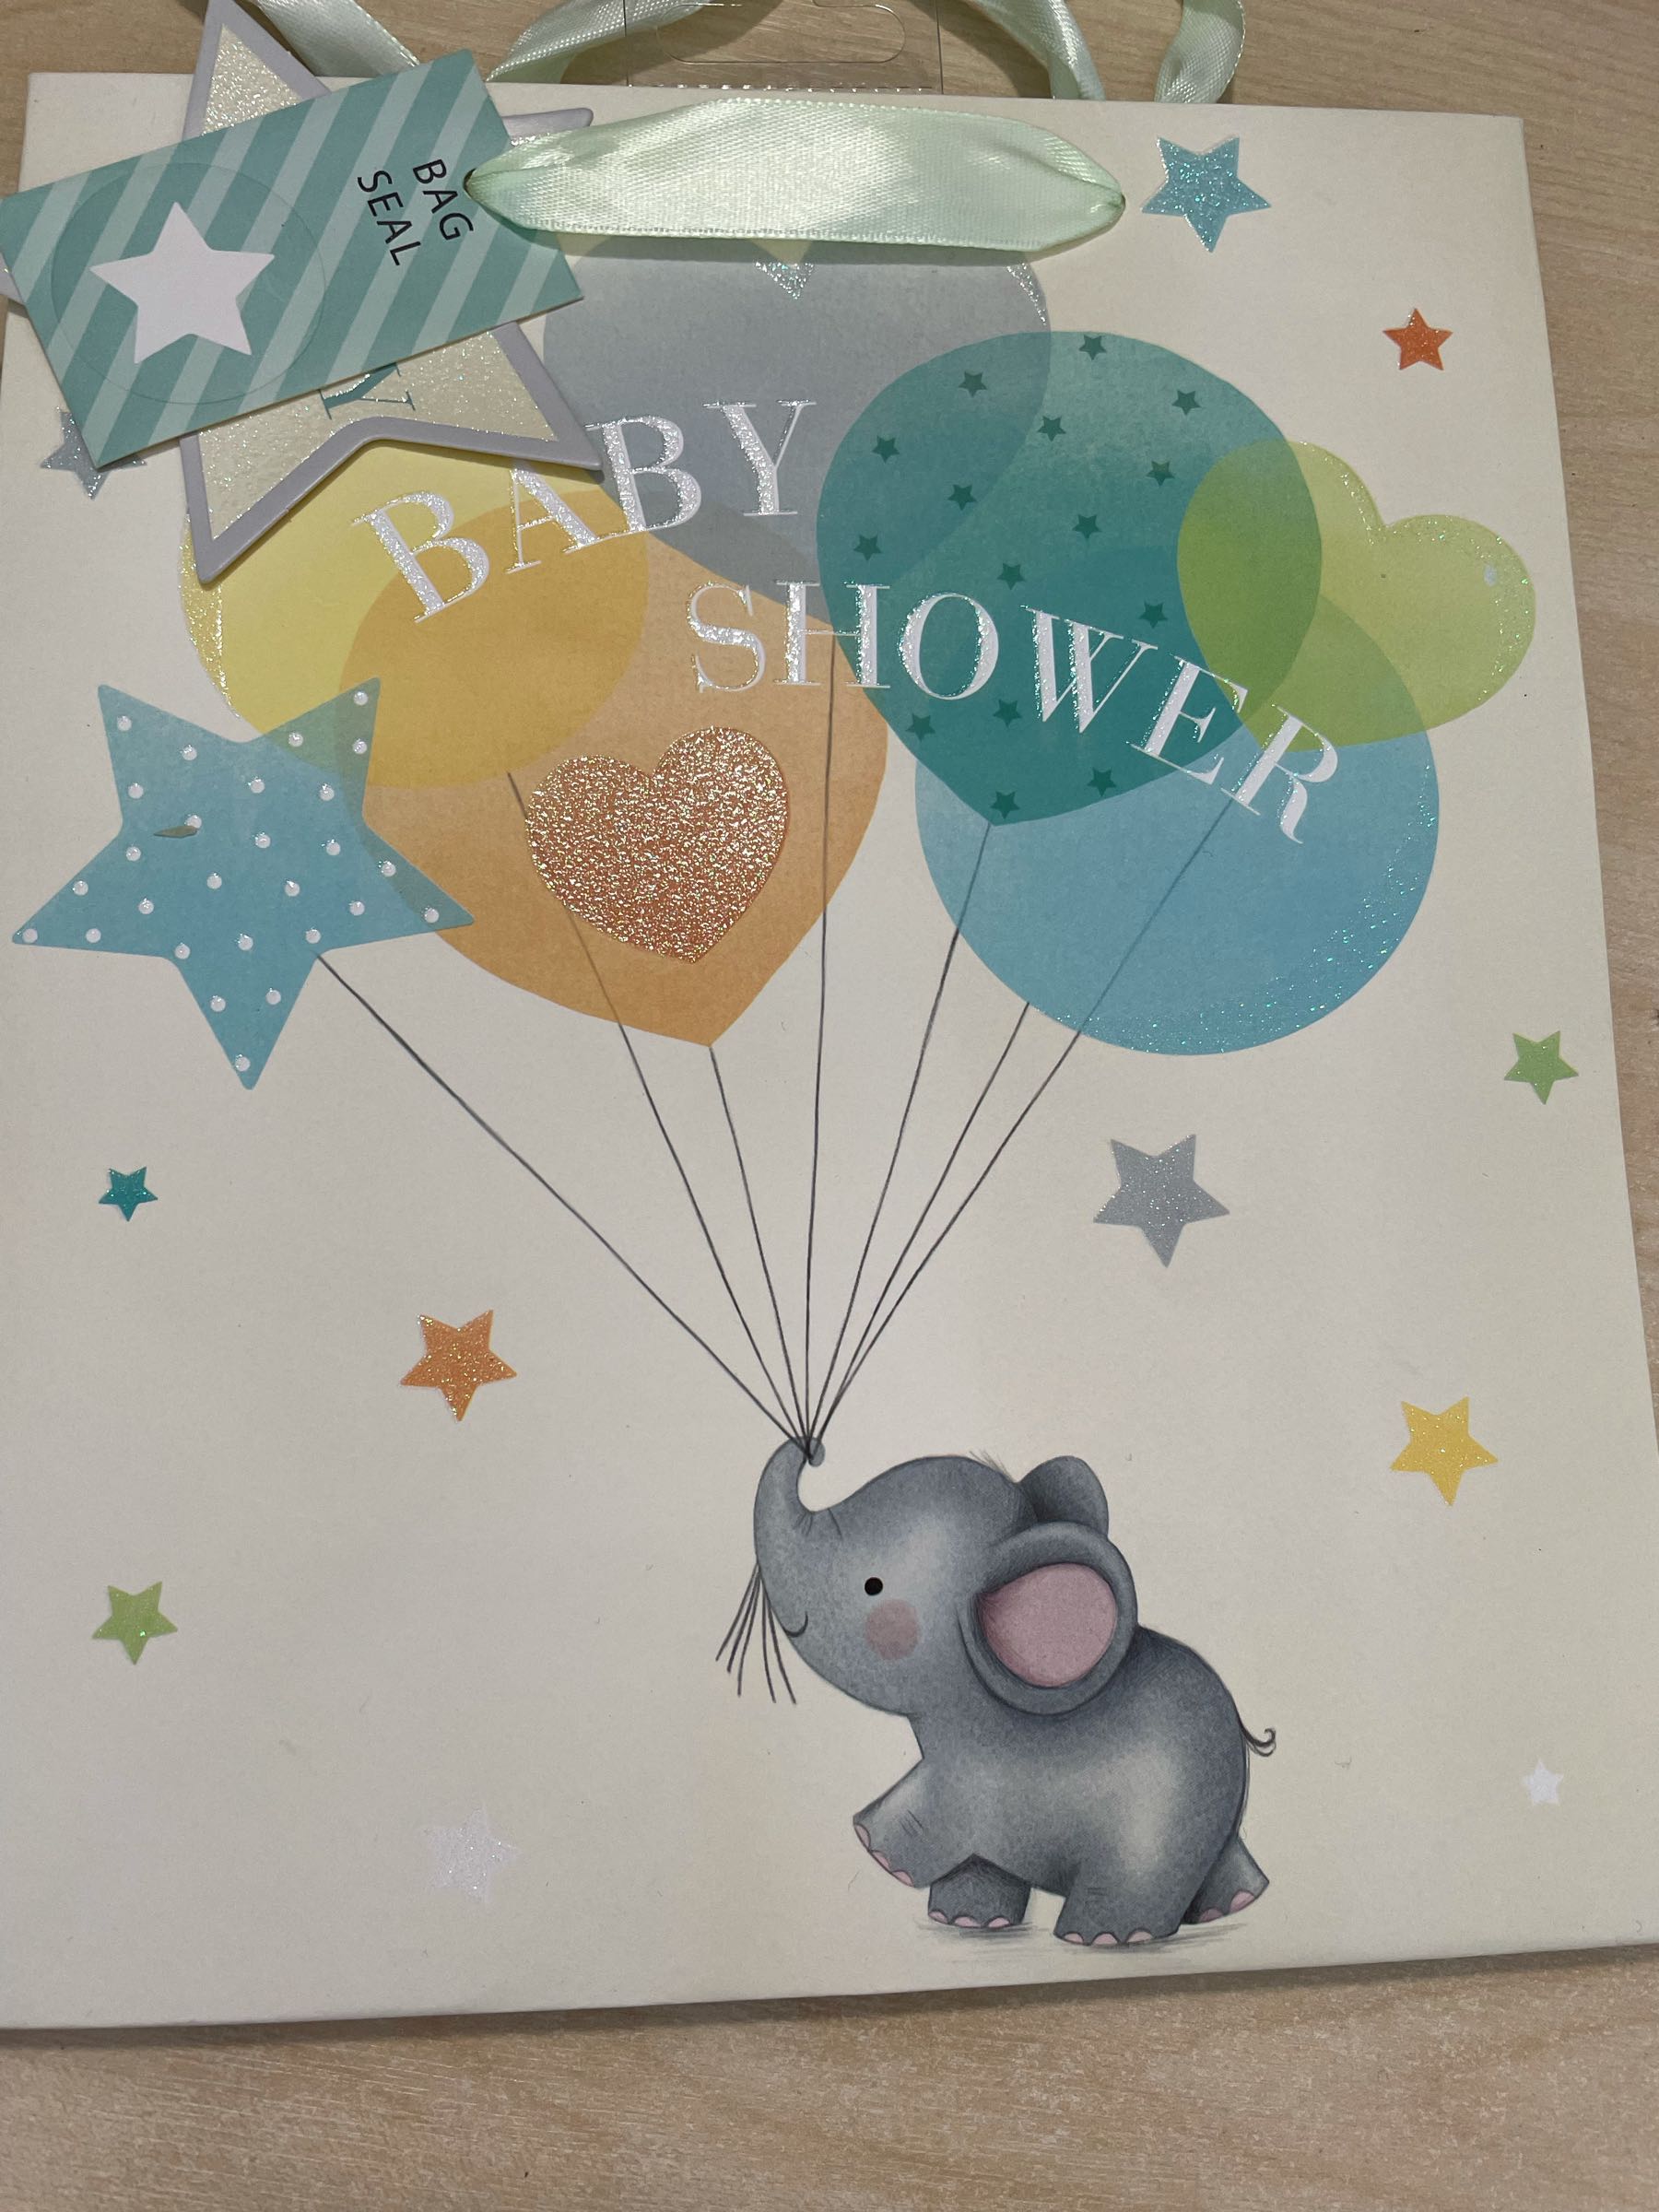 Baby Shower Gift Bag